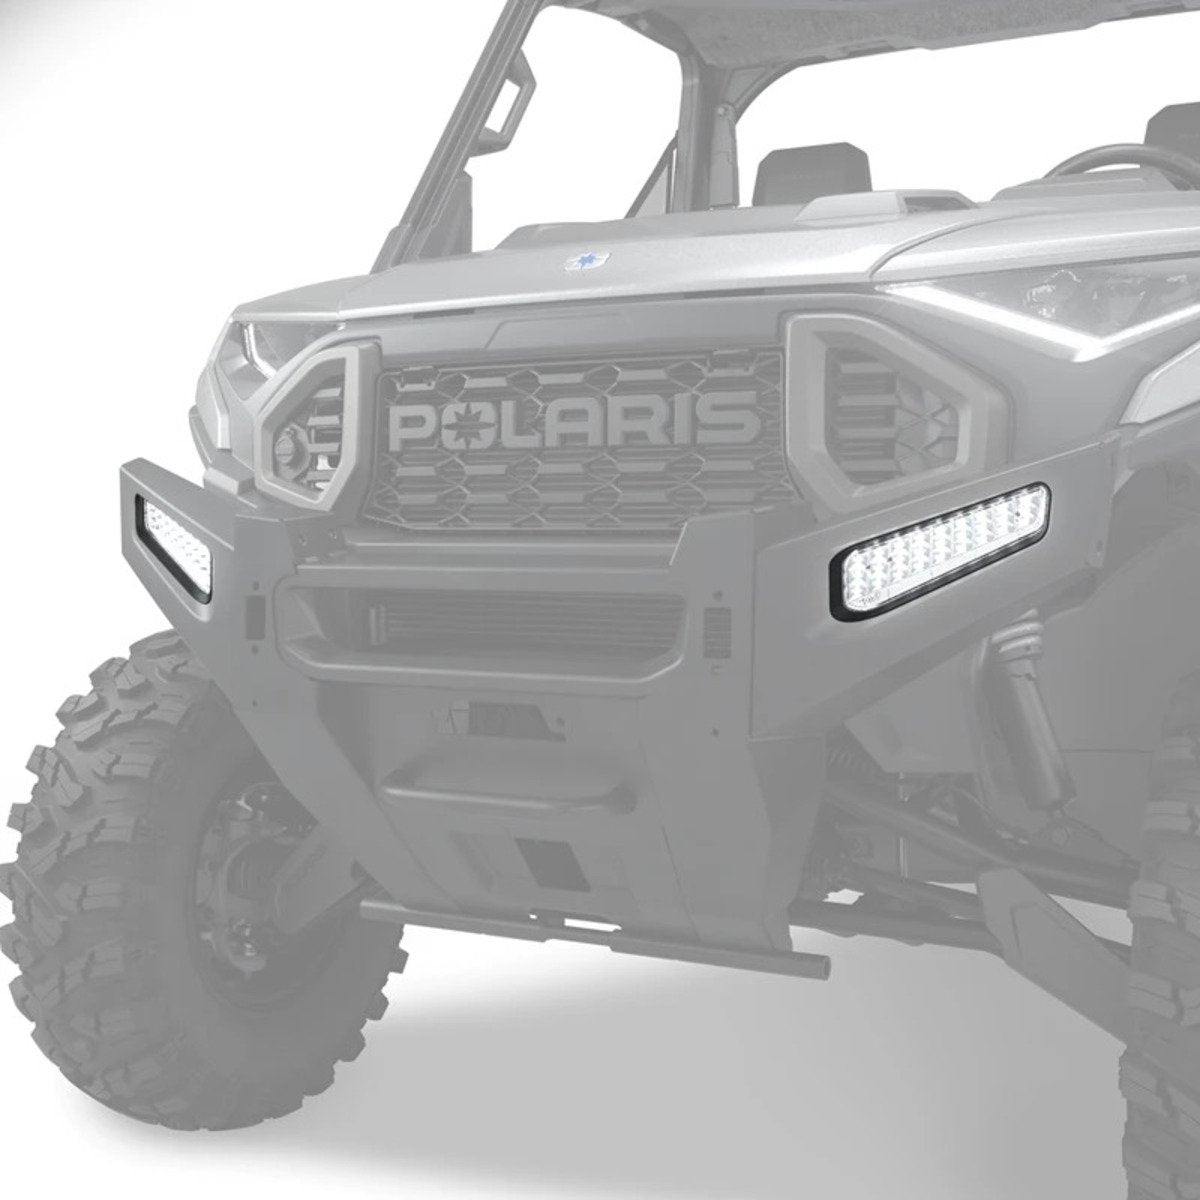 Polaris Auxiliary Lights - Front Brushguard